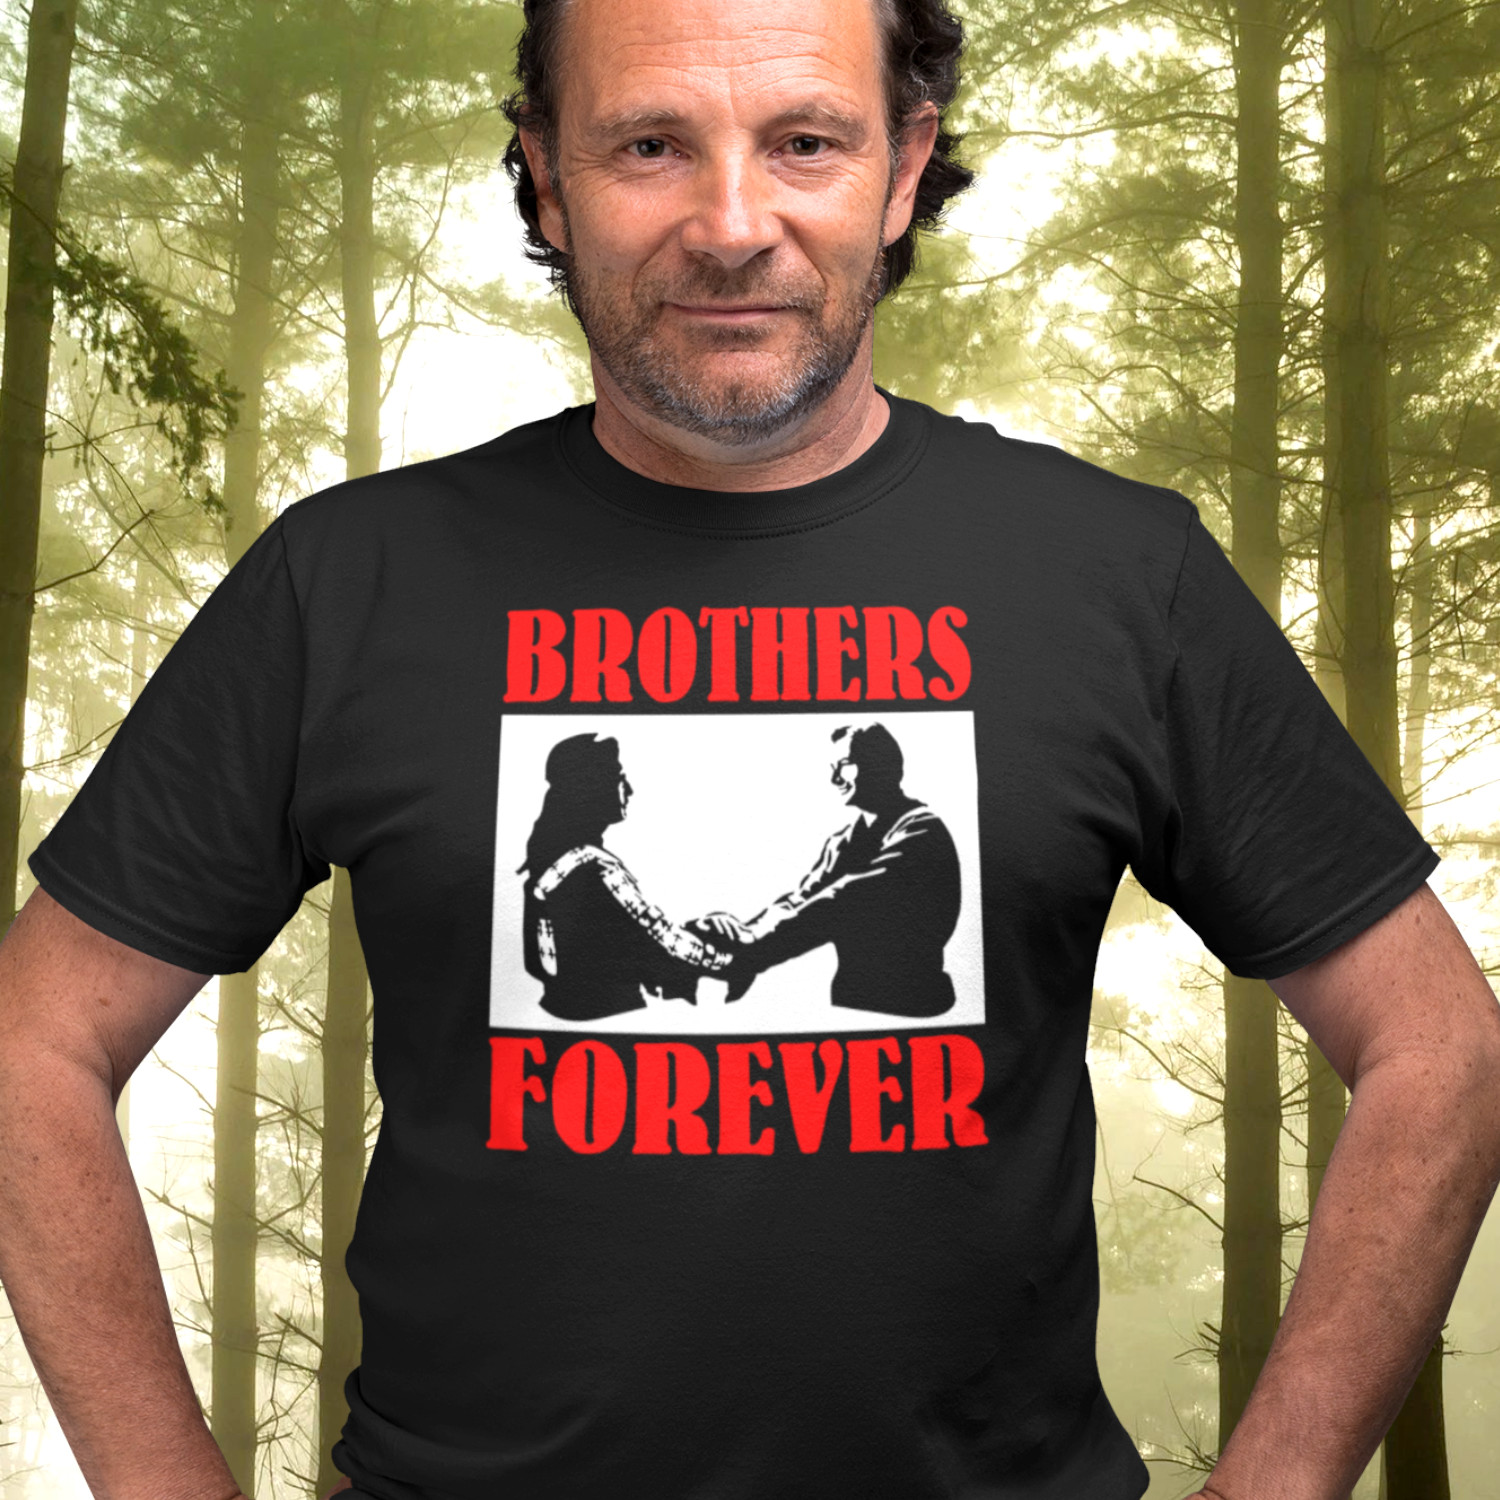 BROTHERS FOREVER - pánske/unisex tričko - čierne/biele